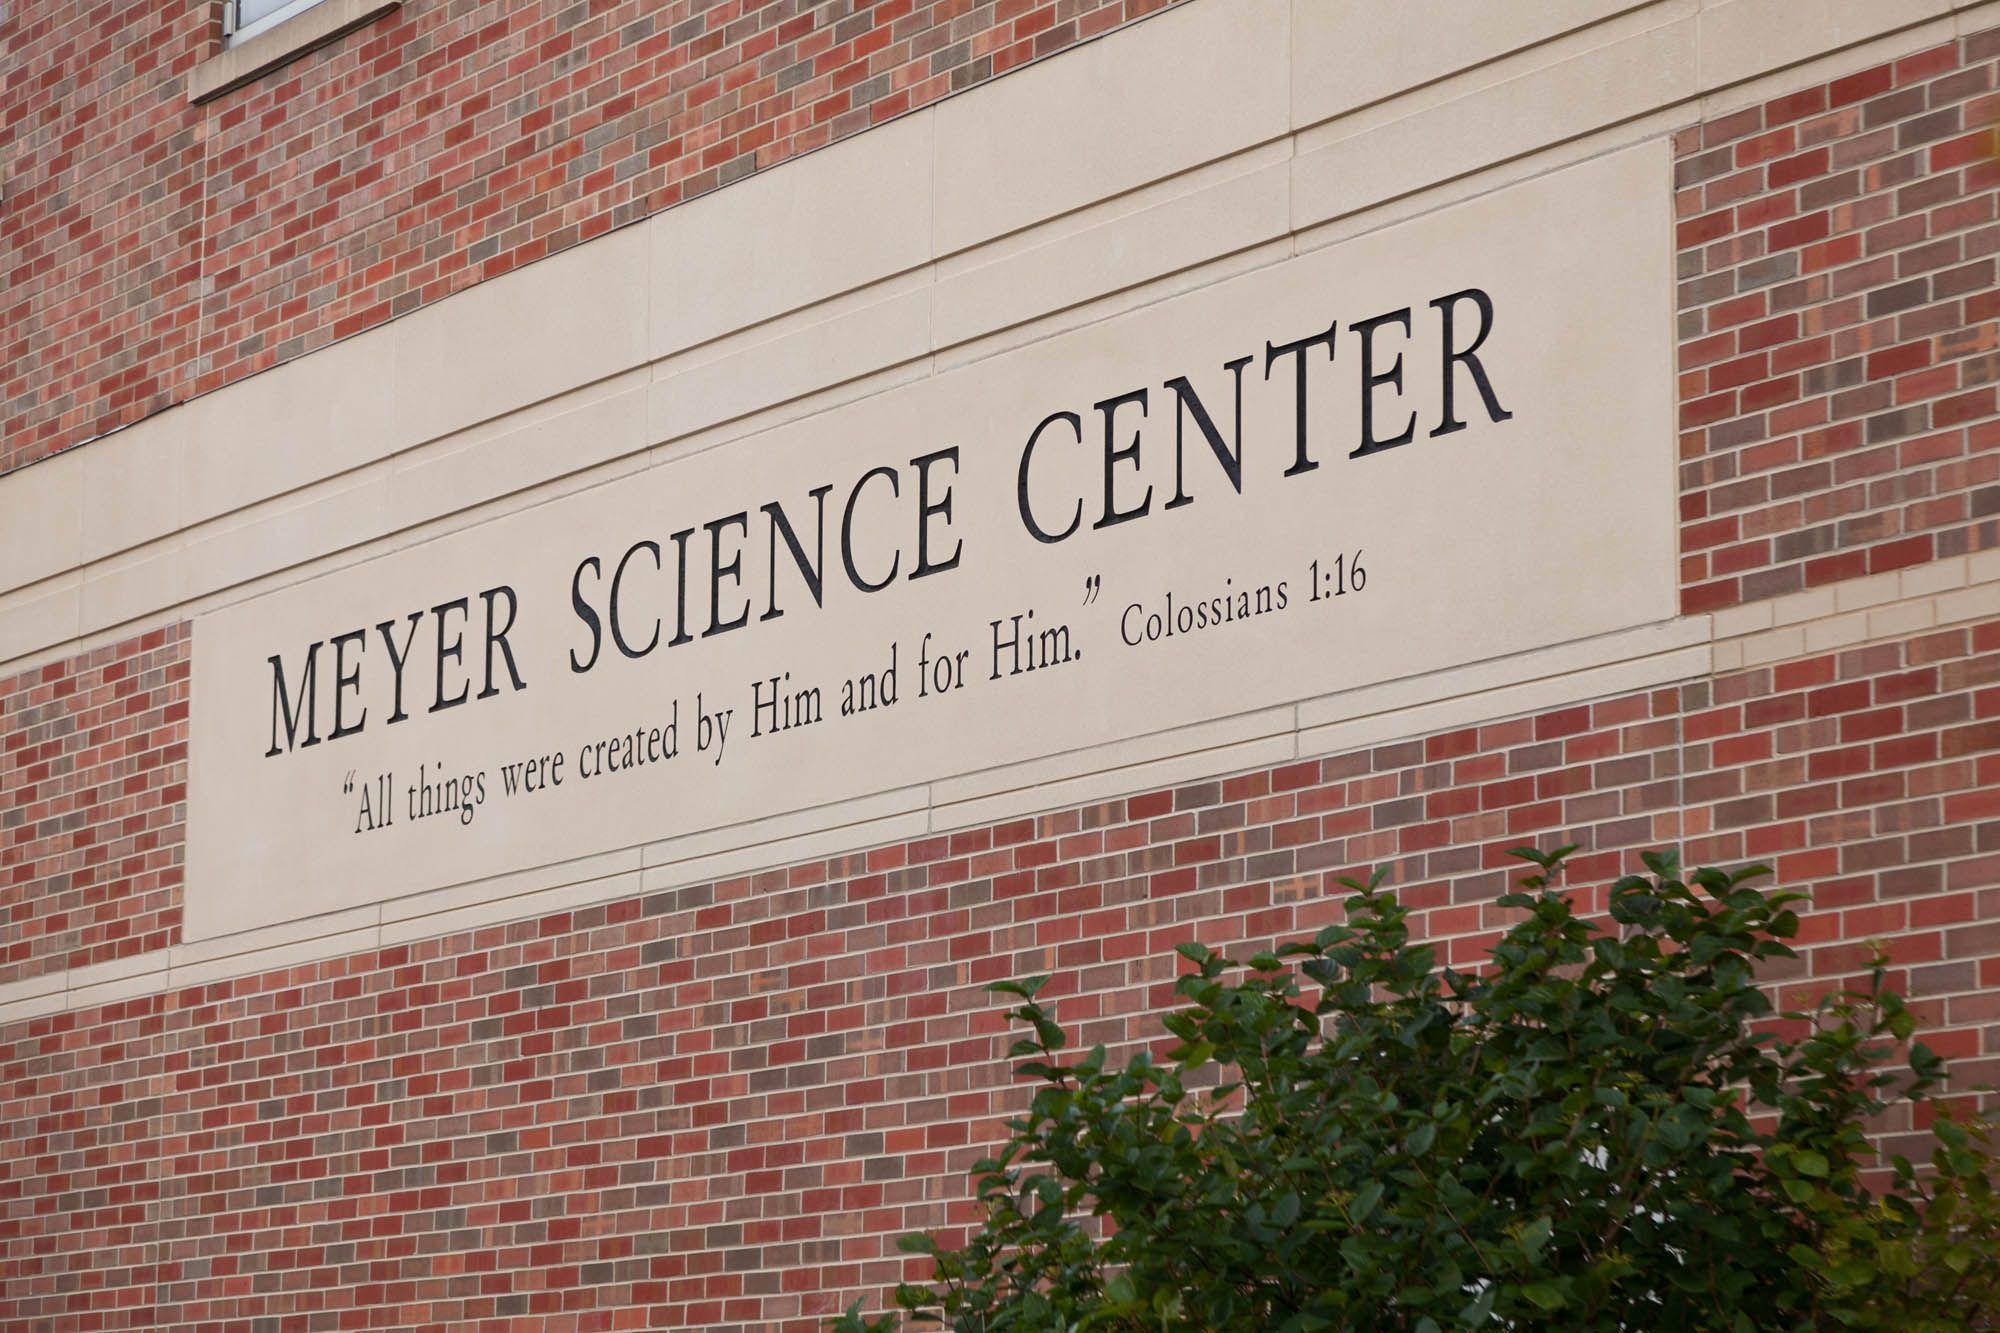 Meyer Science Center Exterior Sign